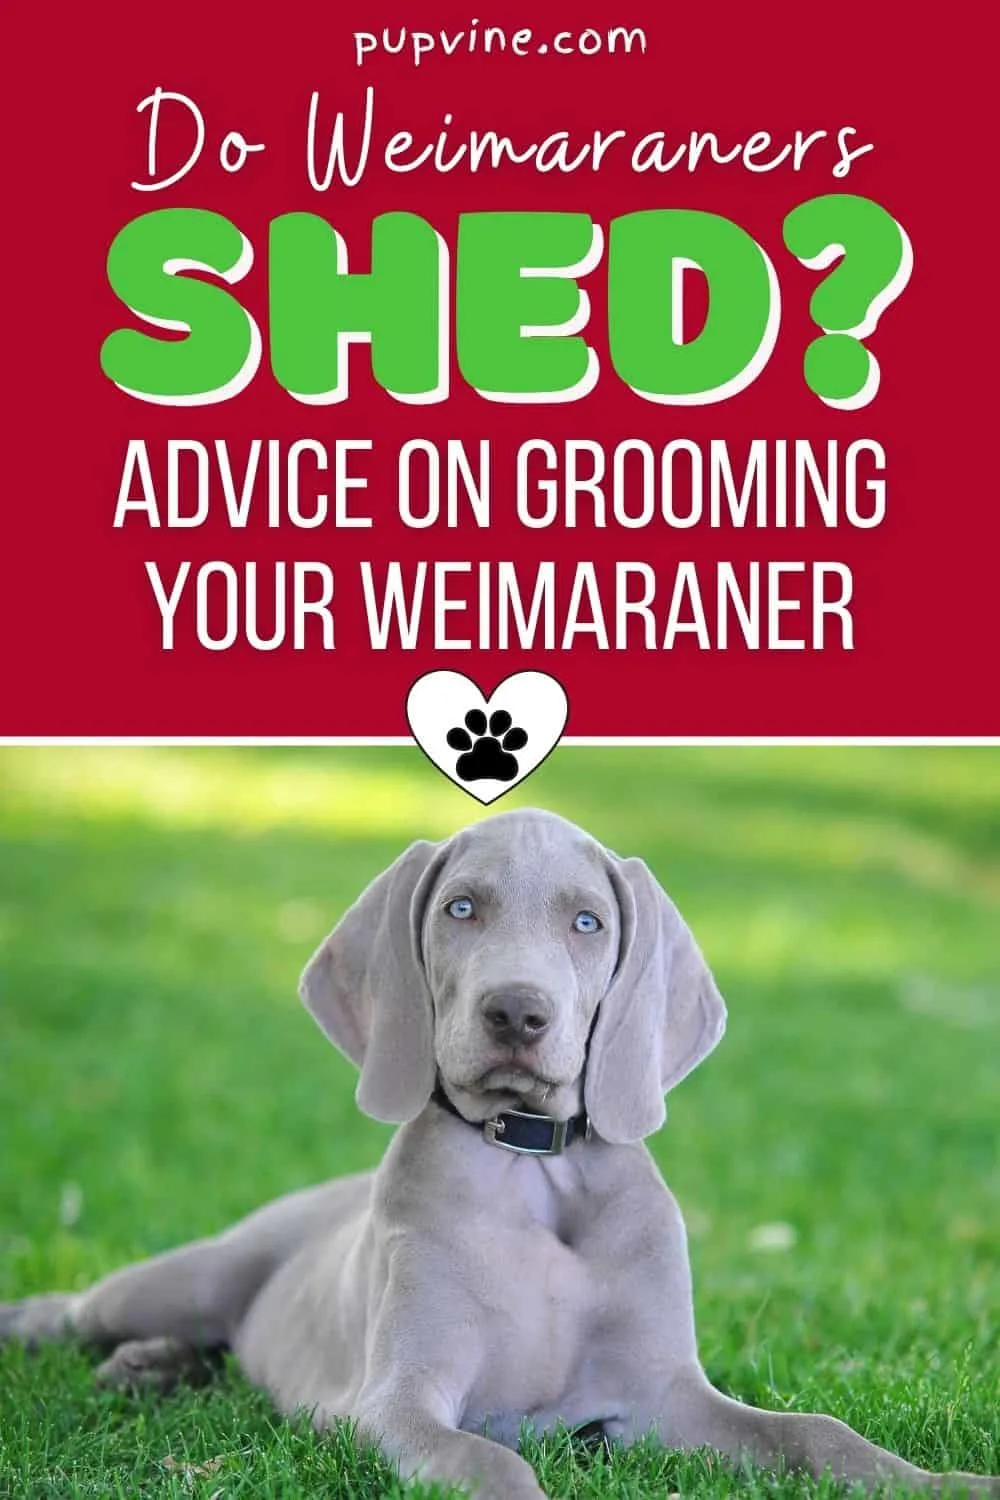 Do Weimaraners Shed? Advice On Grooming Your Weimaraner